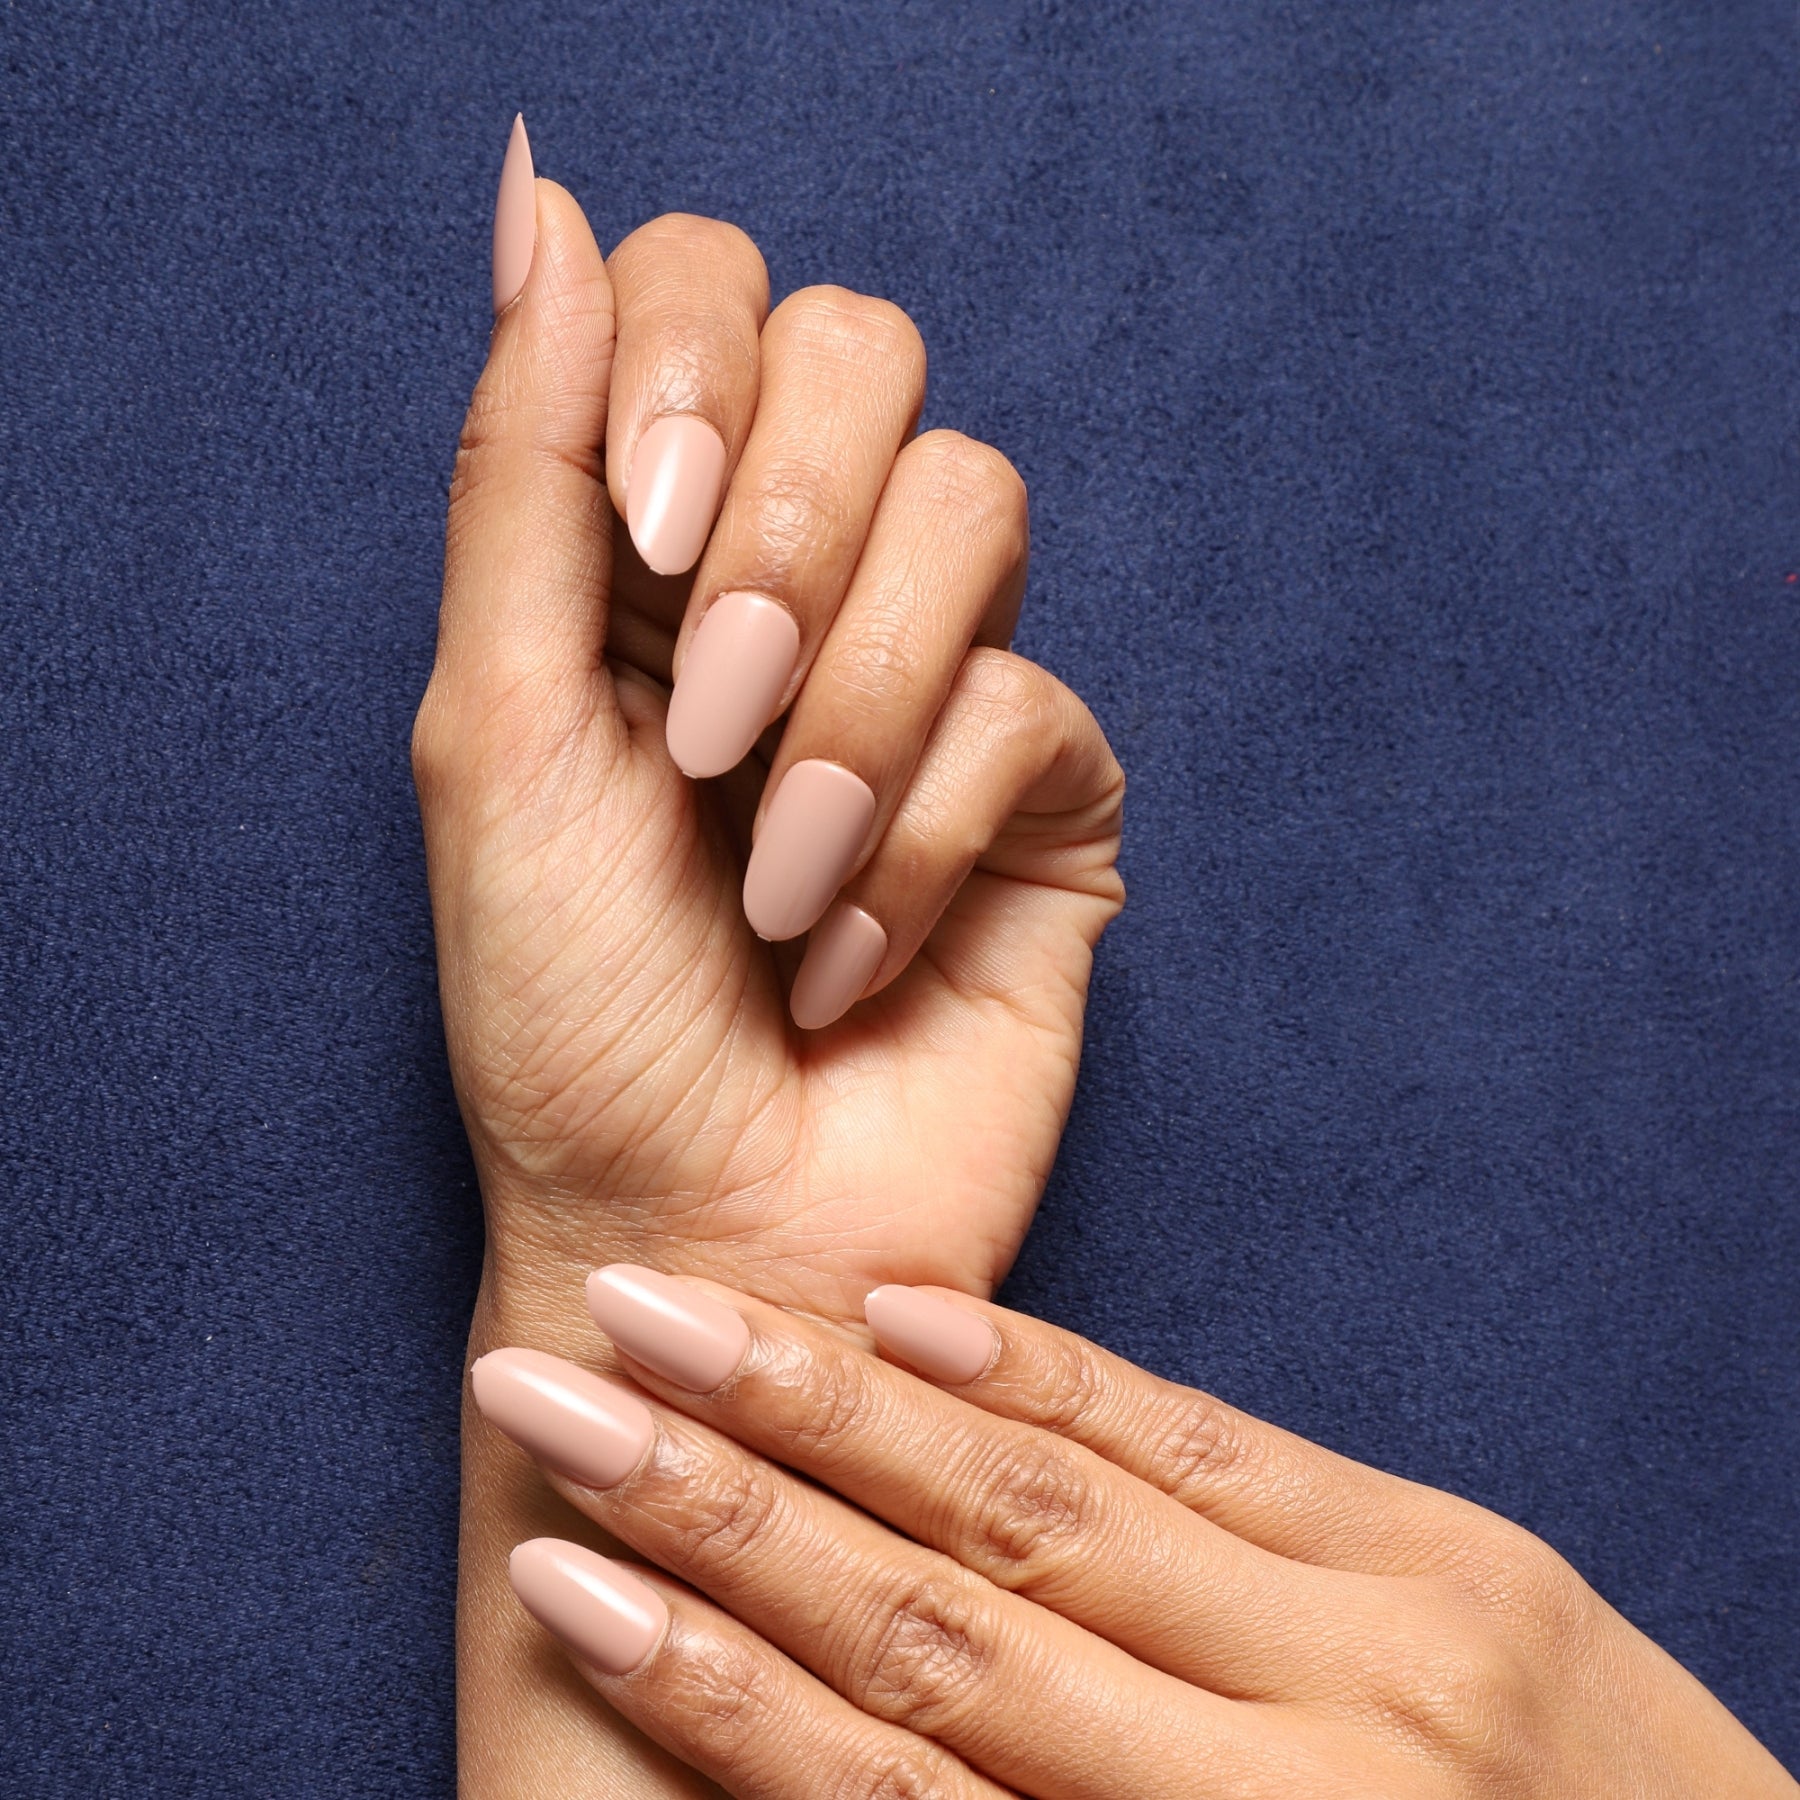 Nail cosmetics - Indian Journal of Dermatology, Venereology and Leprology